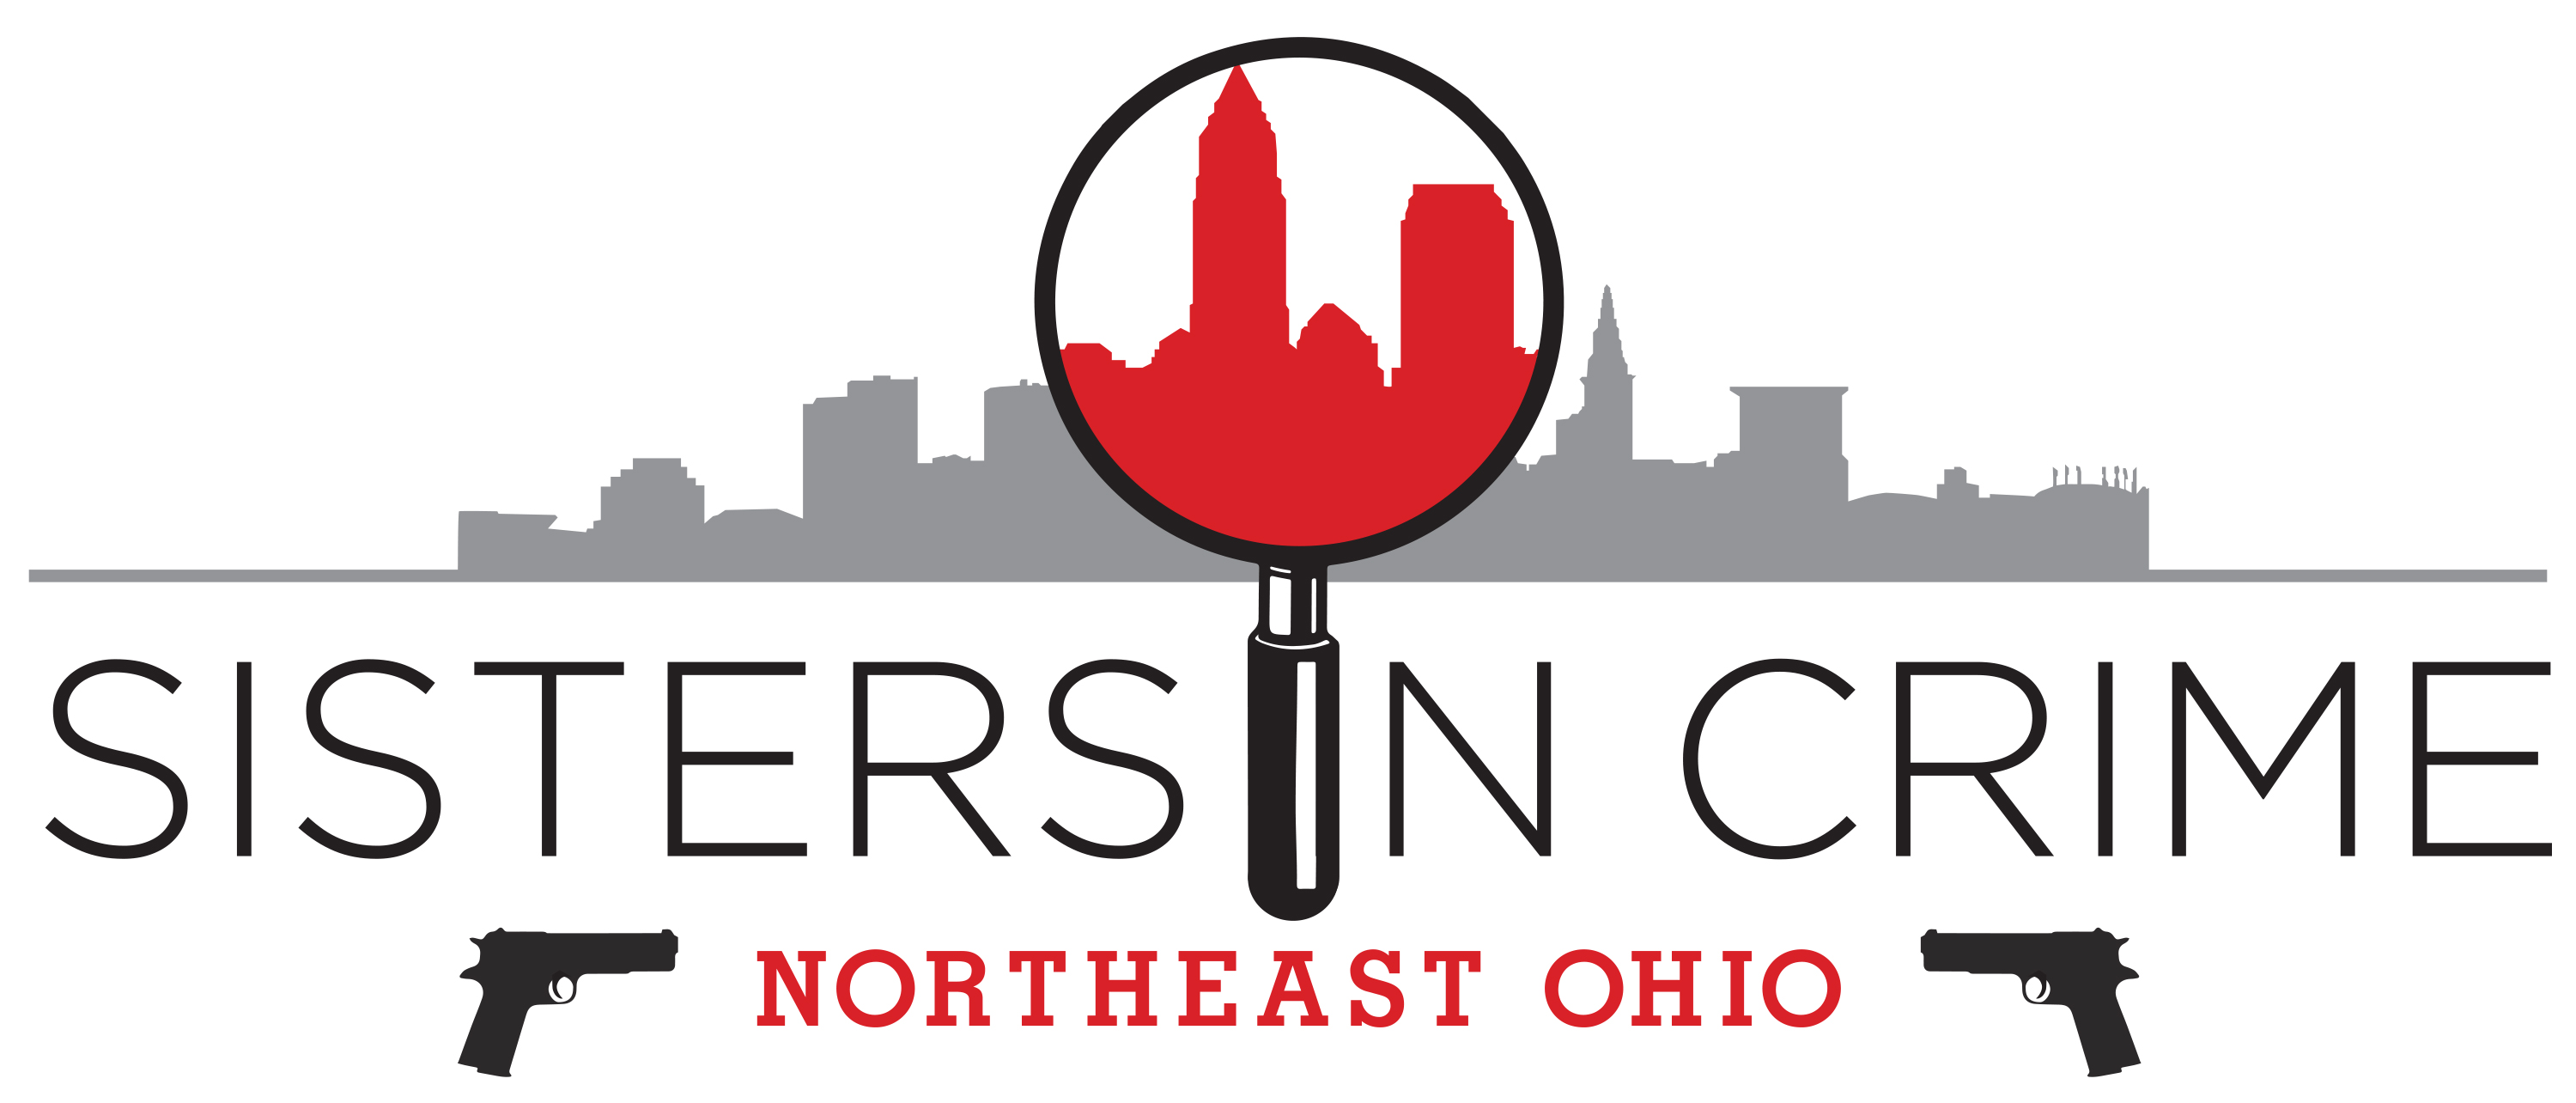 Northeast Ohio Sisters in Crime